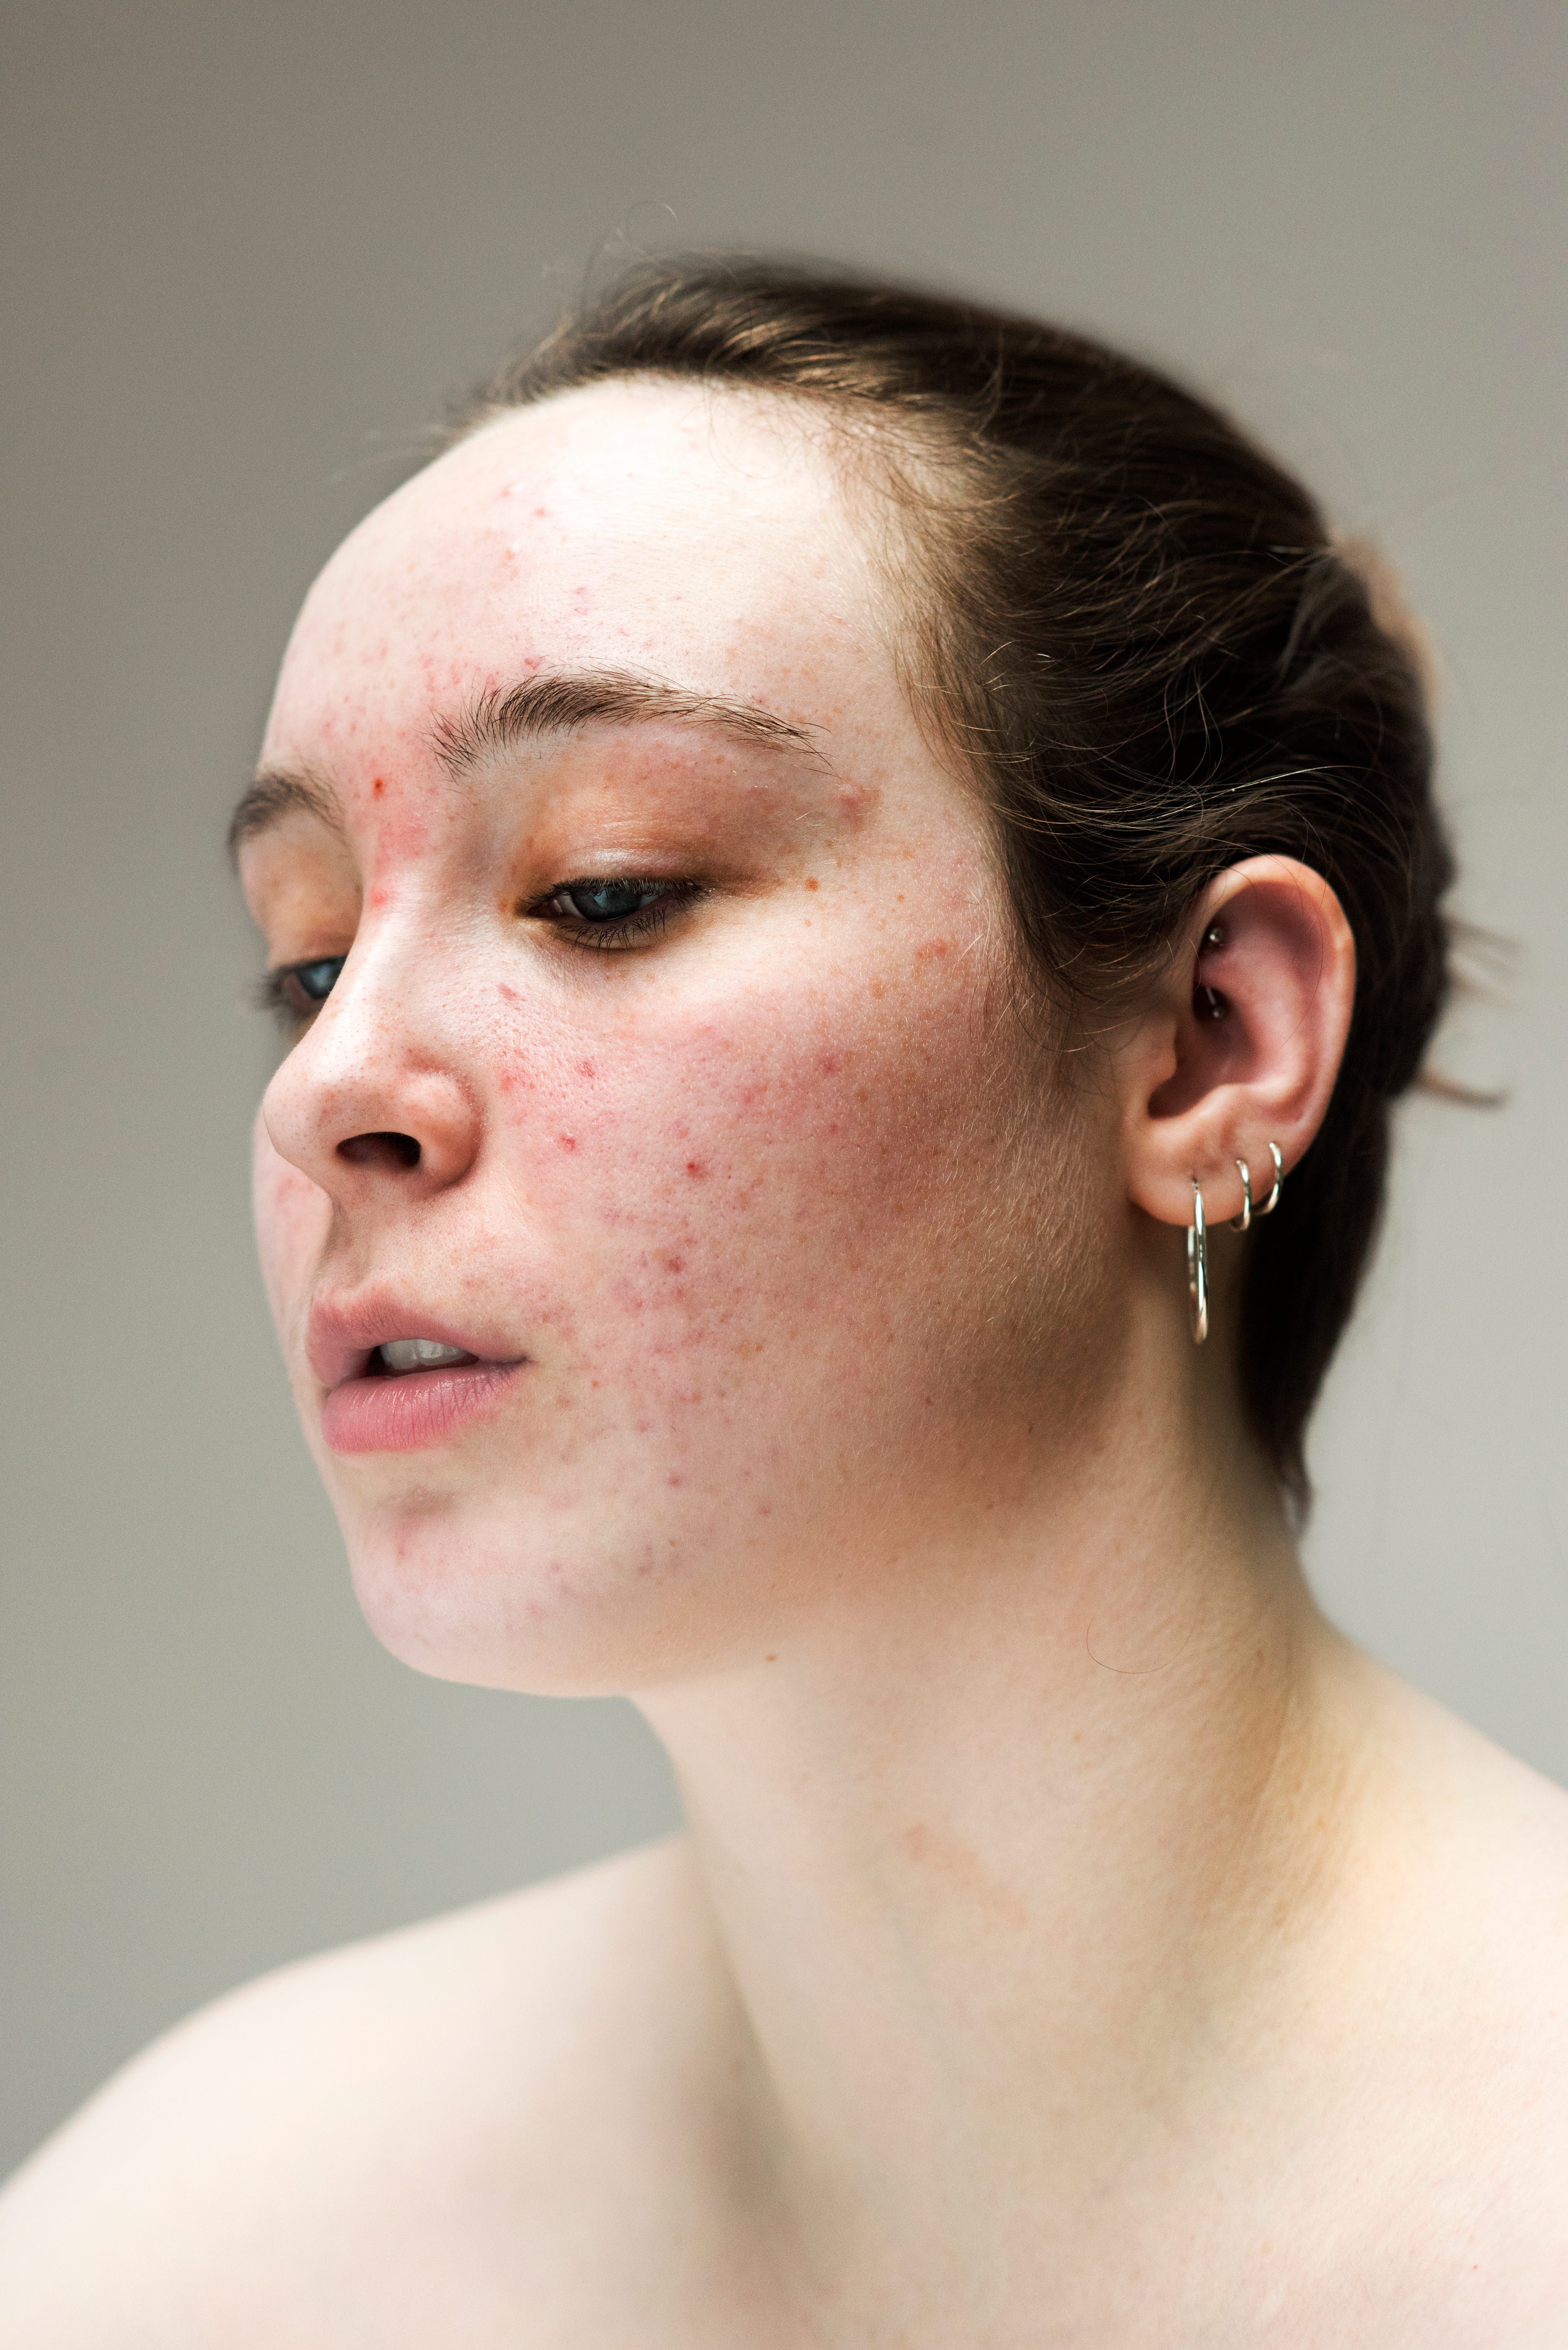 The Raw Beauty Of Women With Acne, Eczema & Hyperpigmentation - The Raw Beauty Of Women With Acne, Eczema & Hyperpigmentation -   19 beauty Photography people ideas